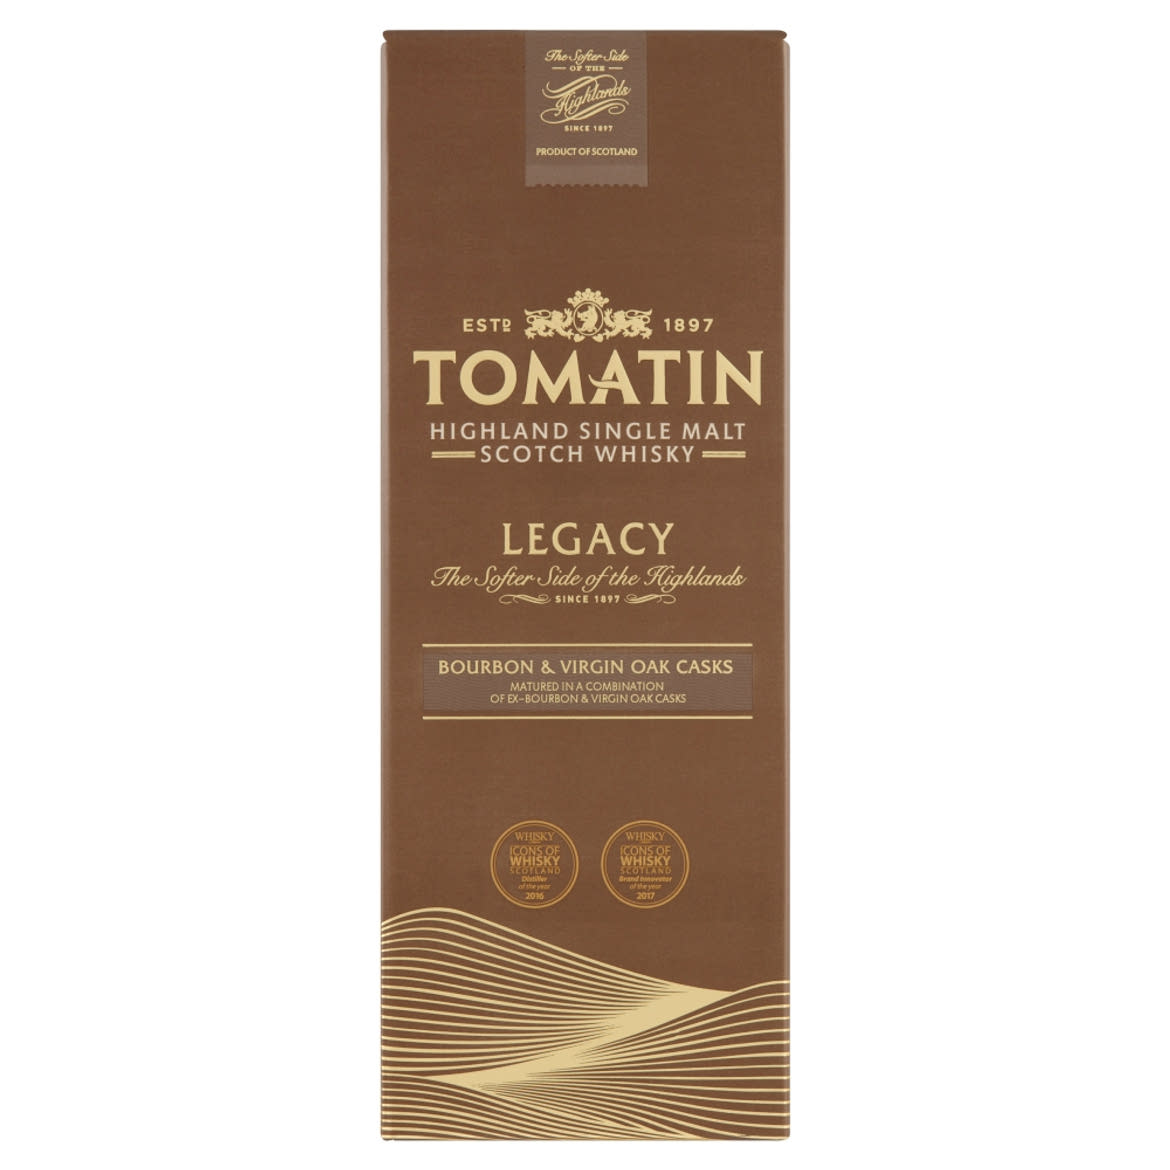 Tomatin Legacy skót malátawhisky 43%